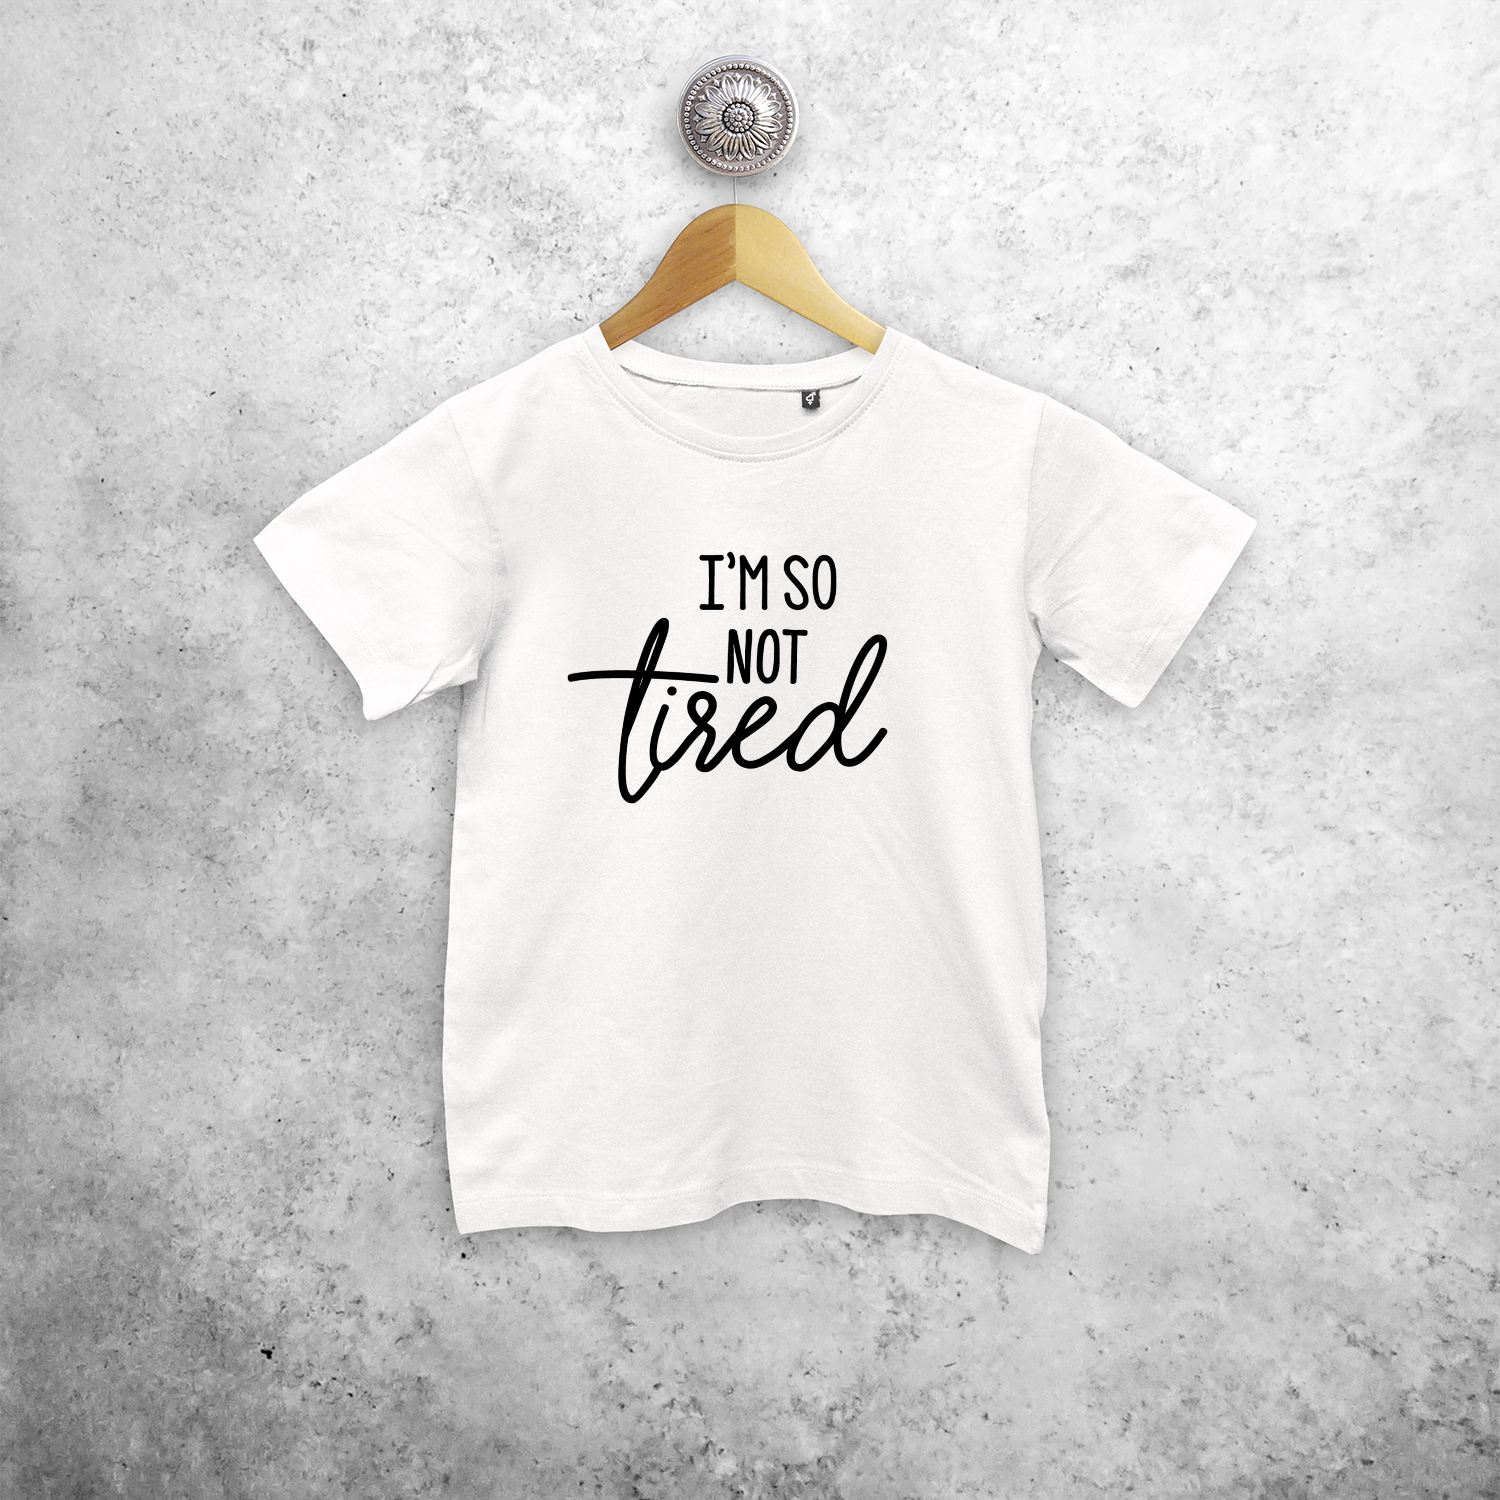 'I'm so not tired' kids shortsleeve shirt